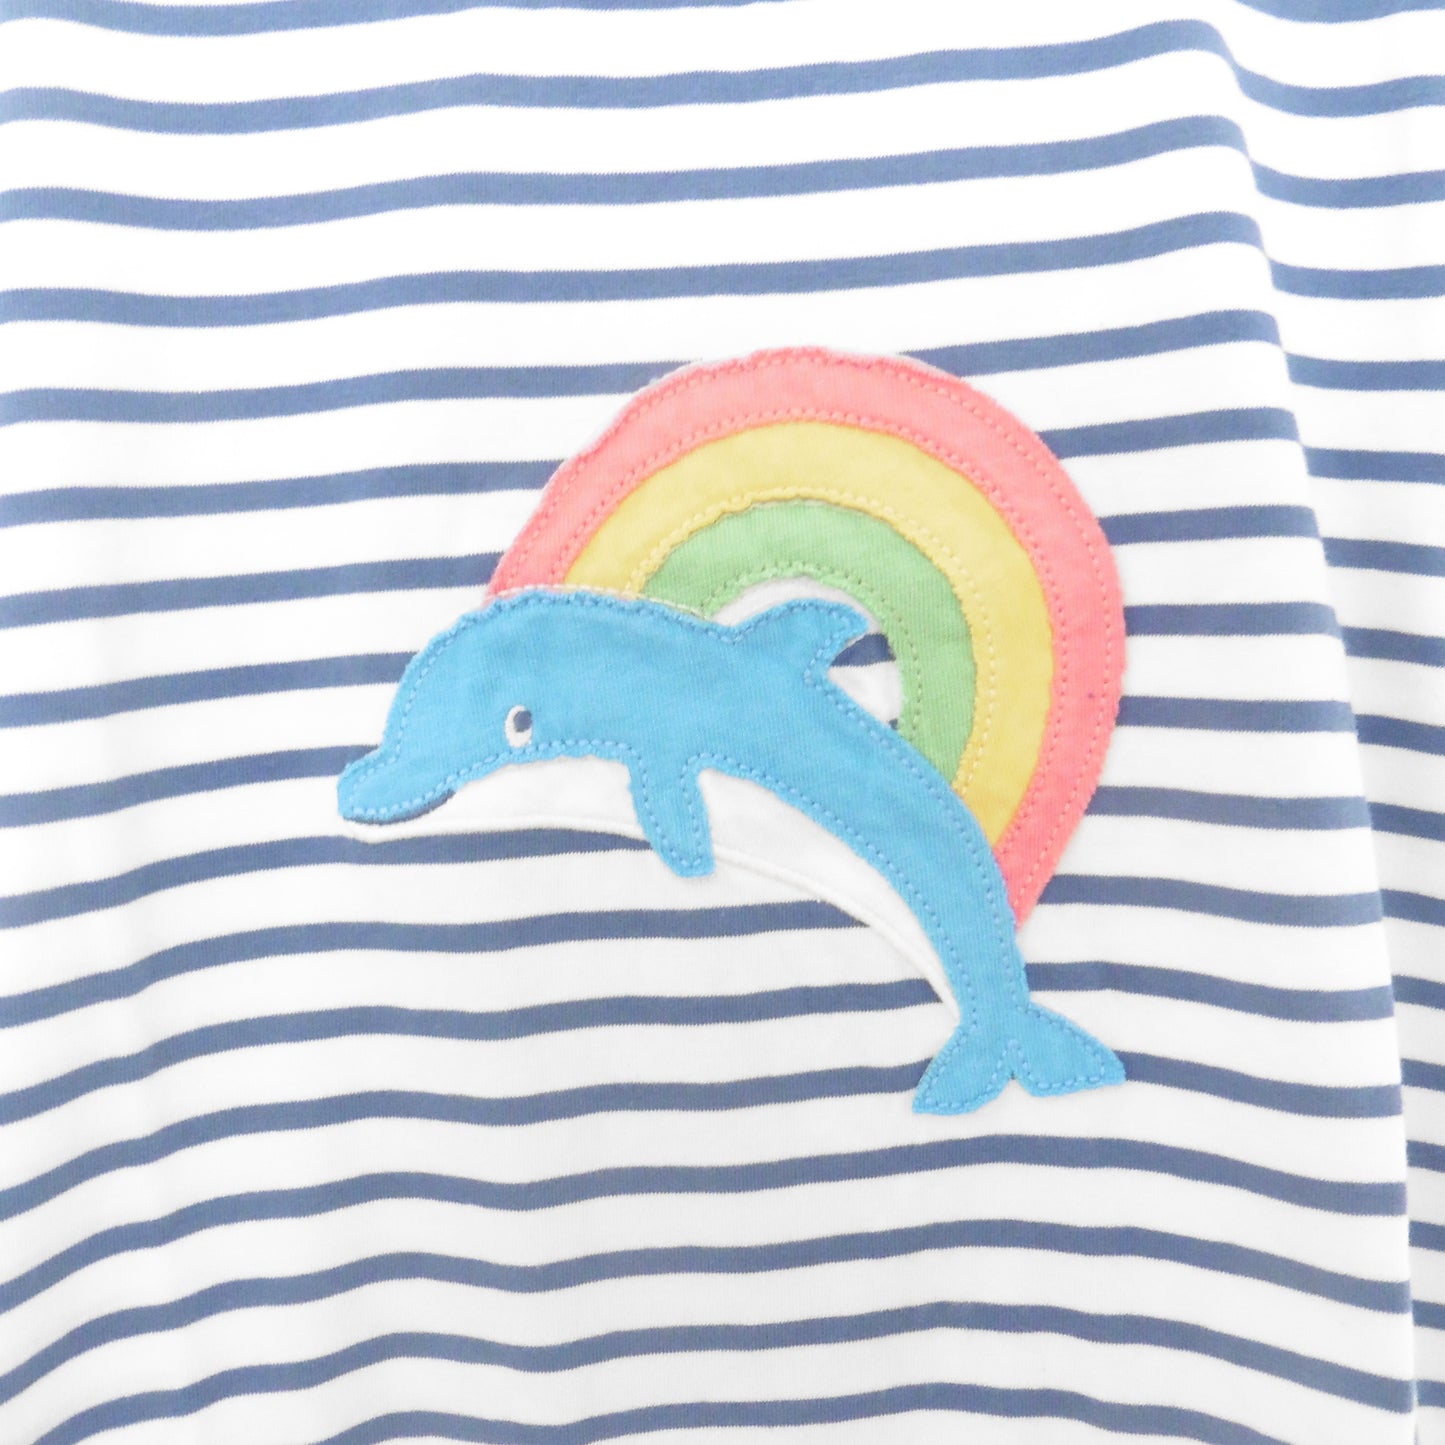 KITE Dolphin rainbow T-shirt 9y NEW